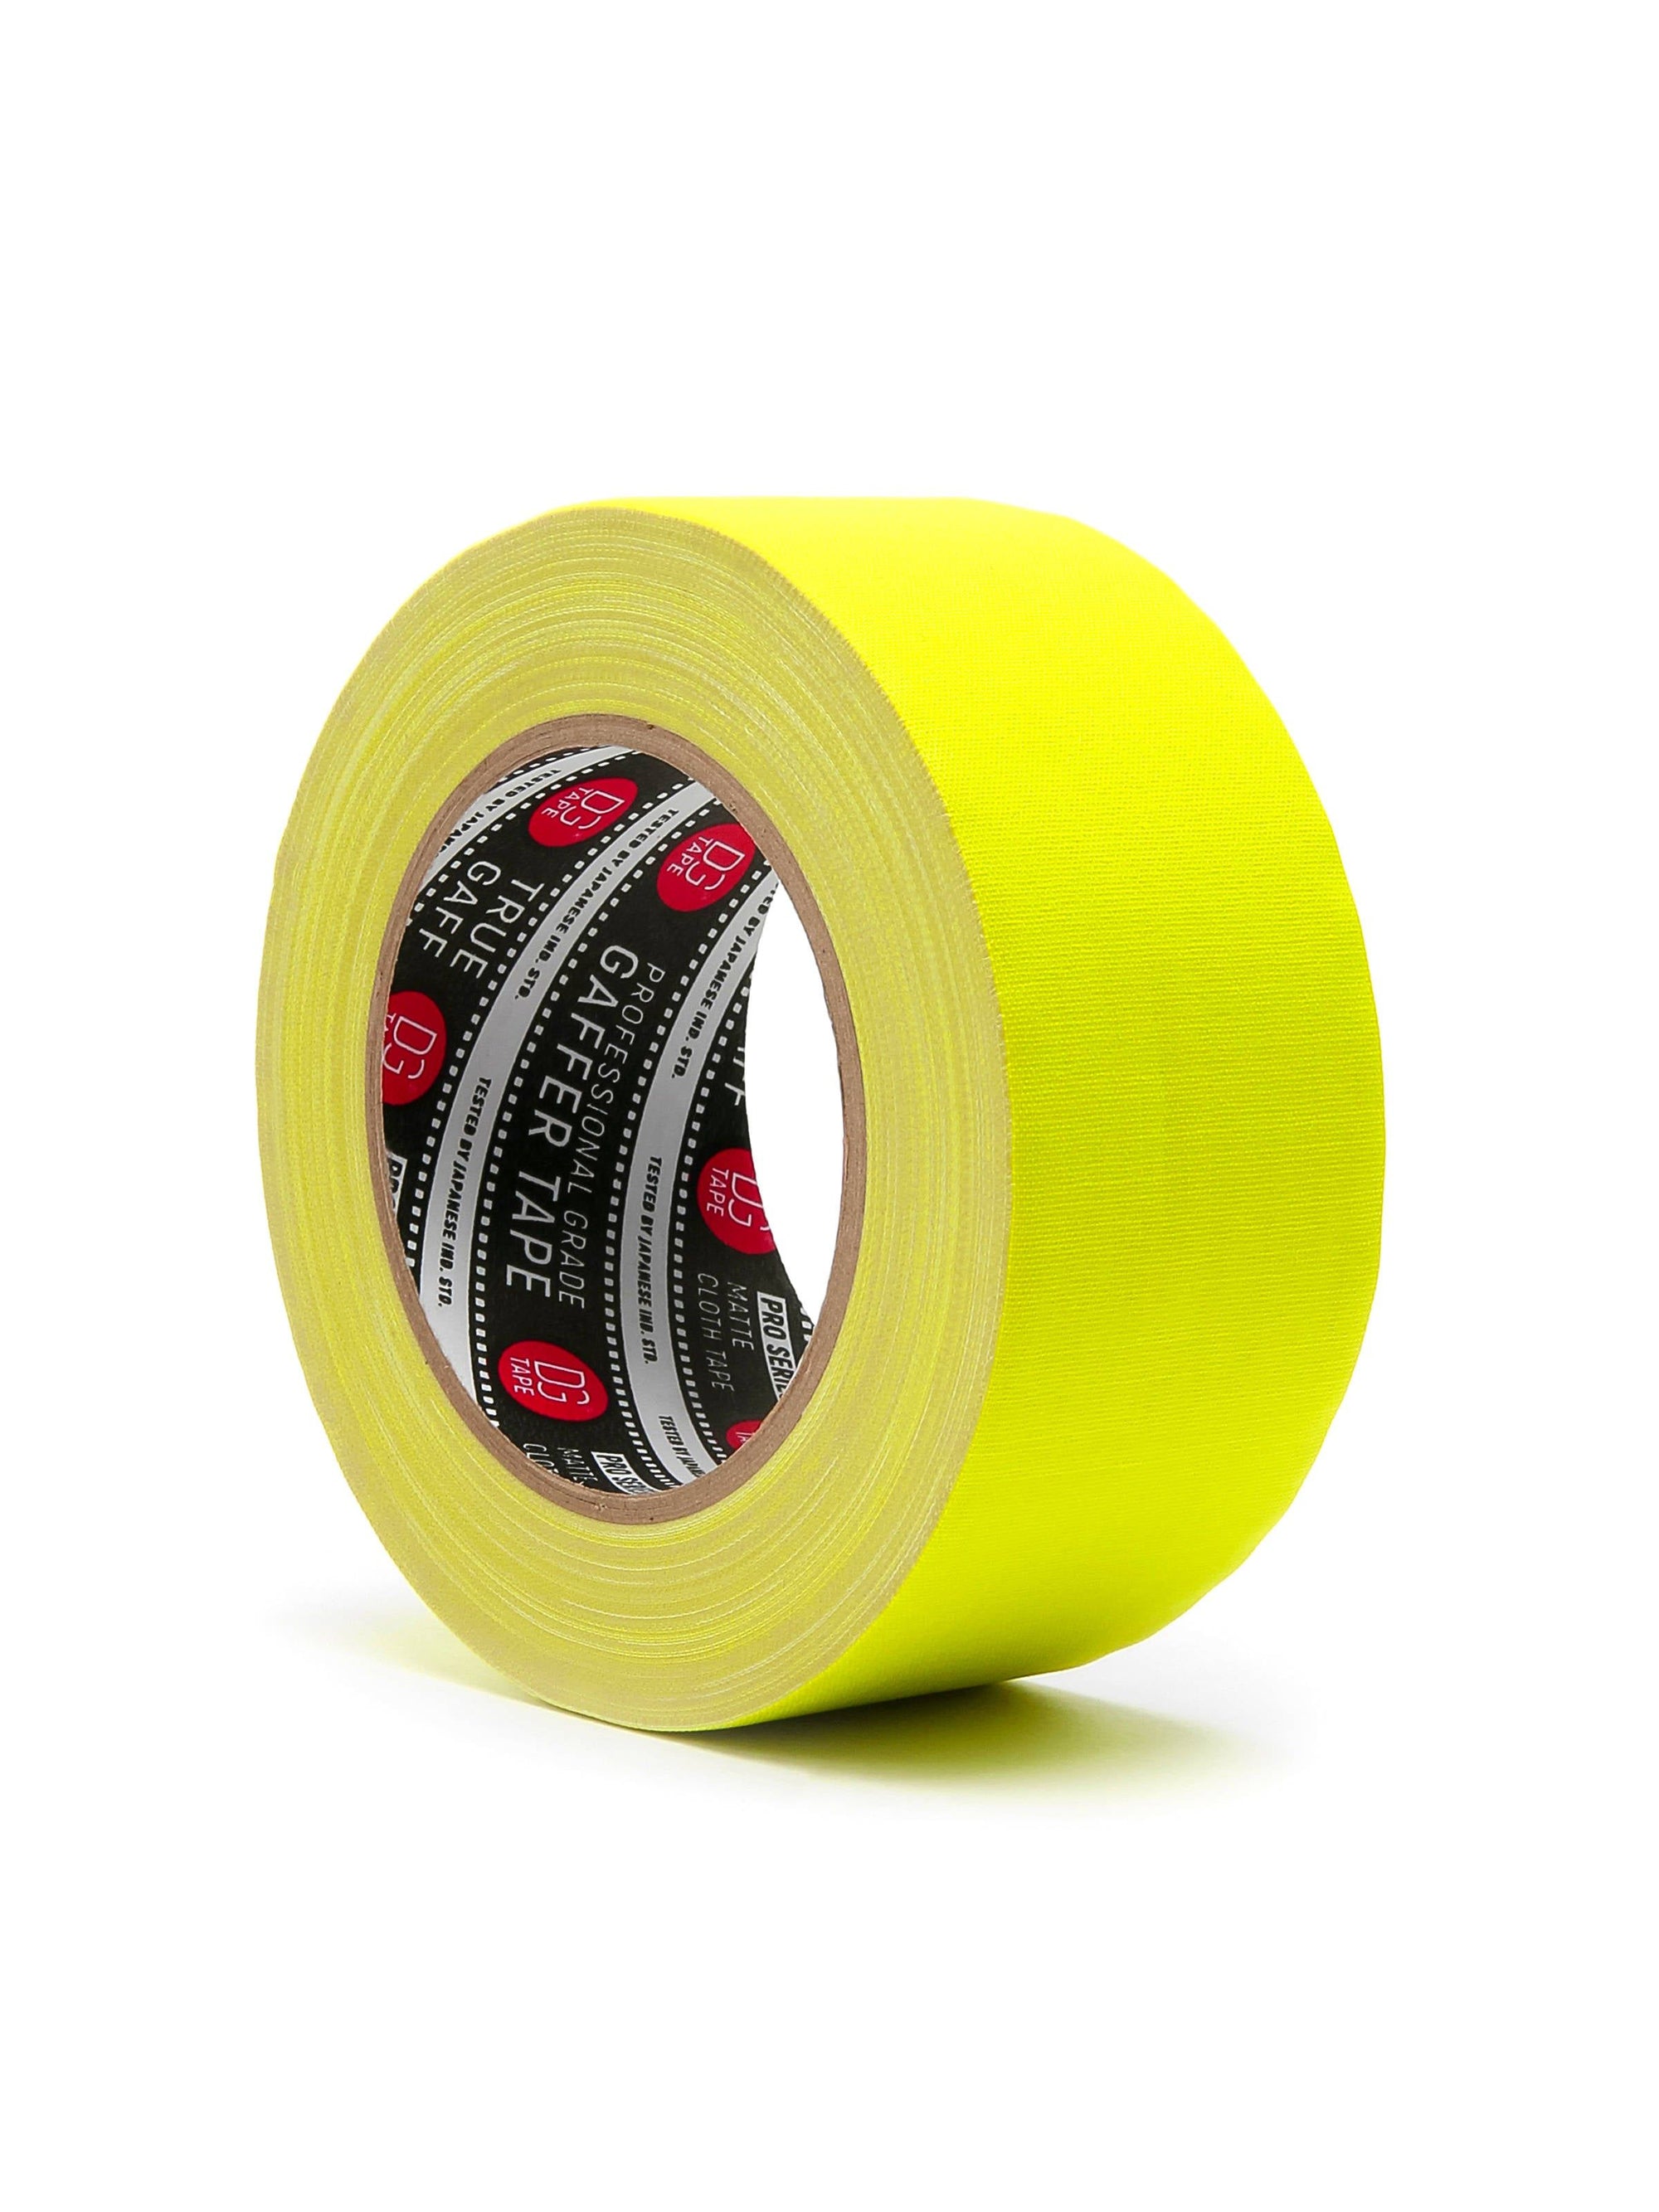 Full Cases Fluorescent Yellow Spike Tape